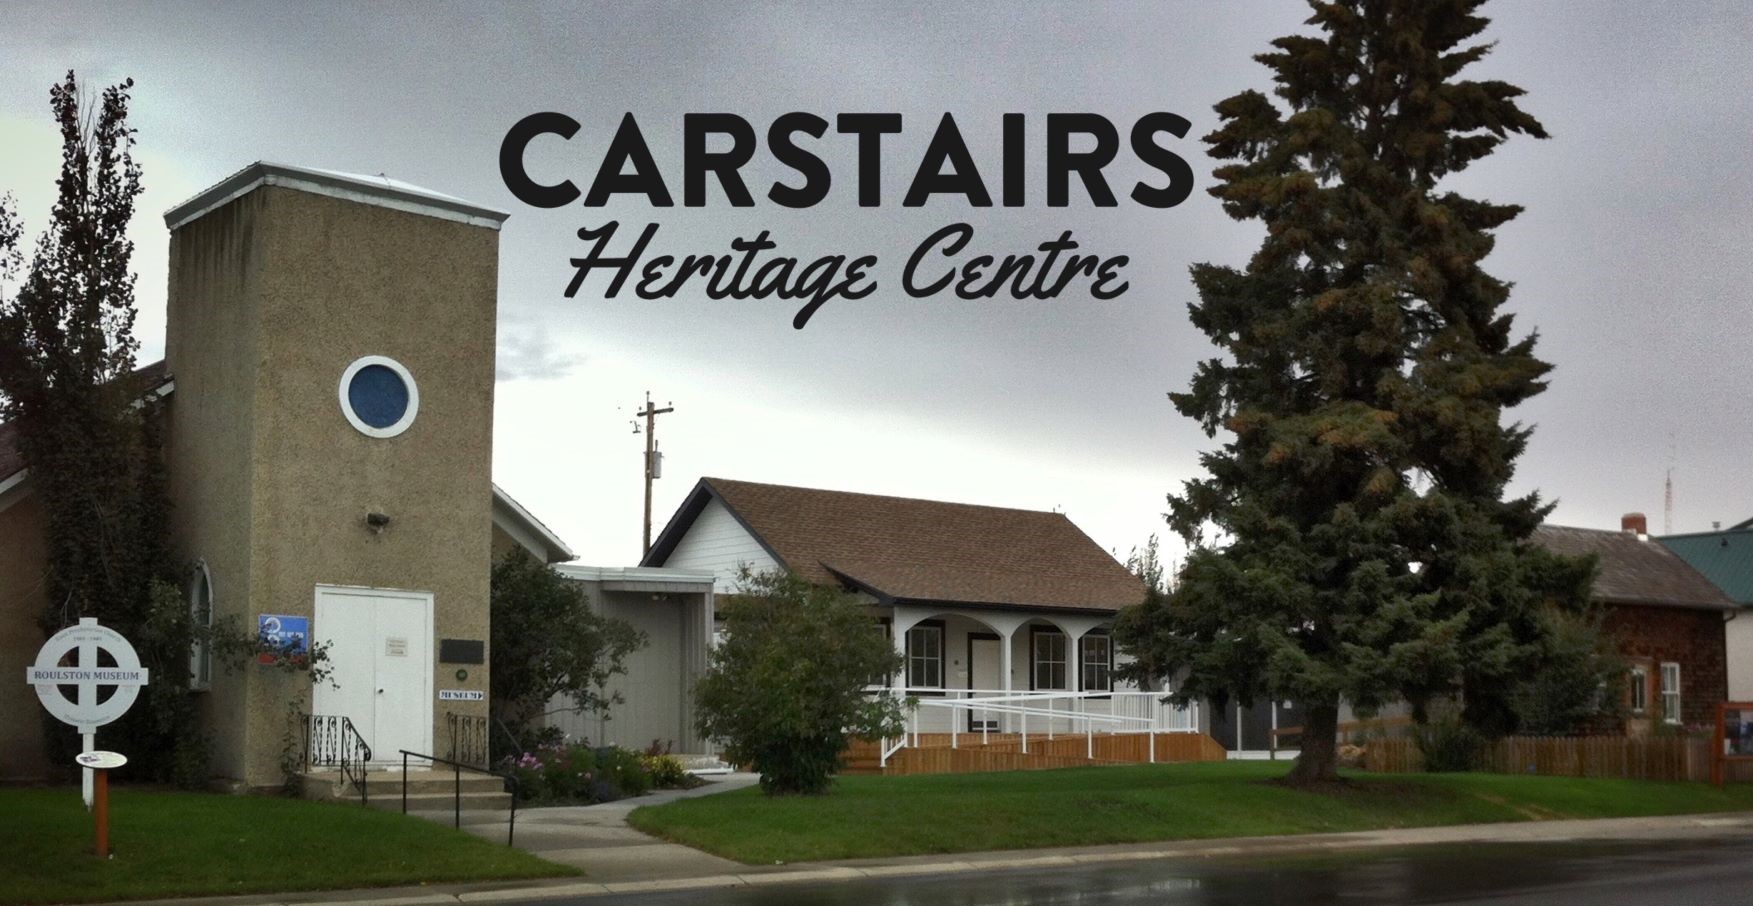 Carstairs Heritage Centre logo